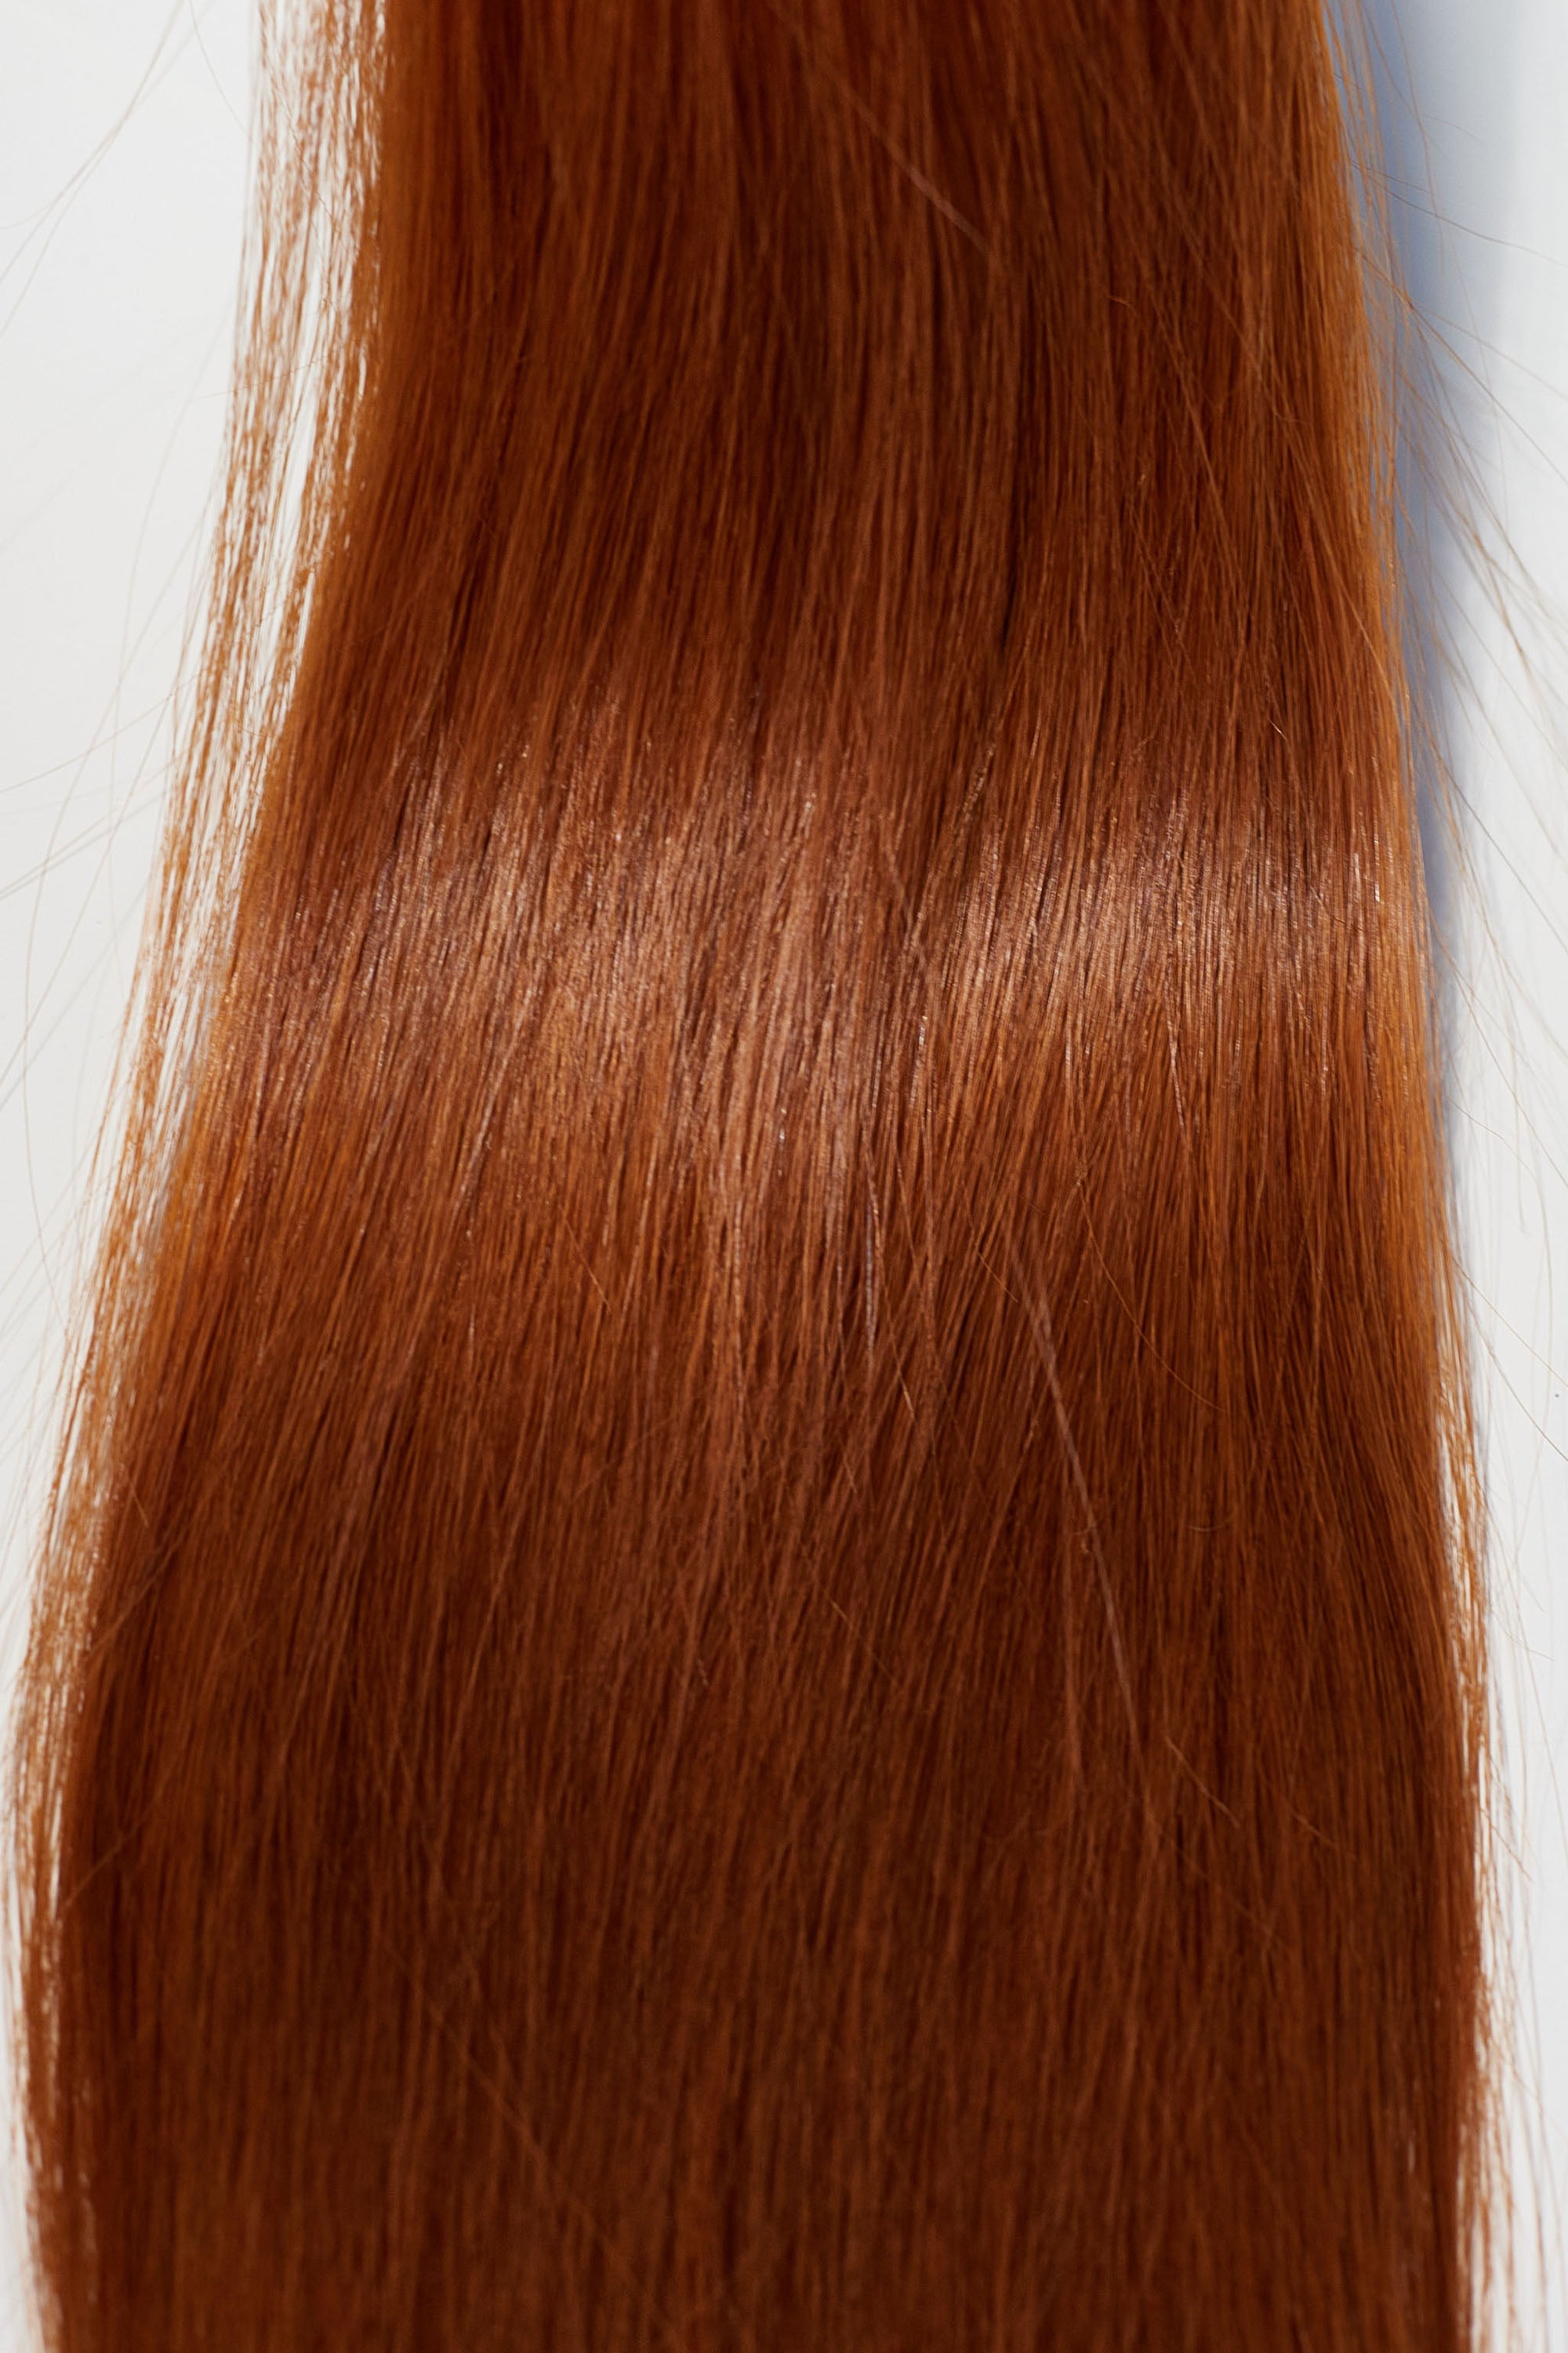 Behair professional Keratin Tip "Premium" 18" (45cm) Natural Straight Brilliant Copper #130 - 25g (Micro - 0.5g each pcs) hair extensions